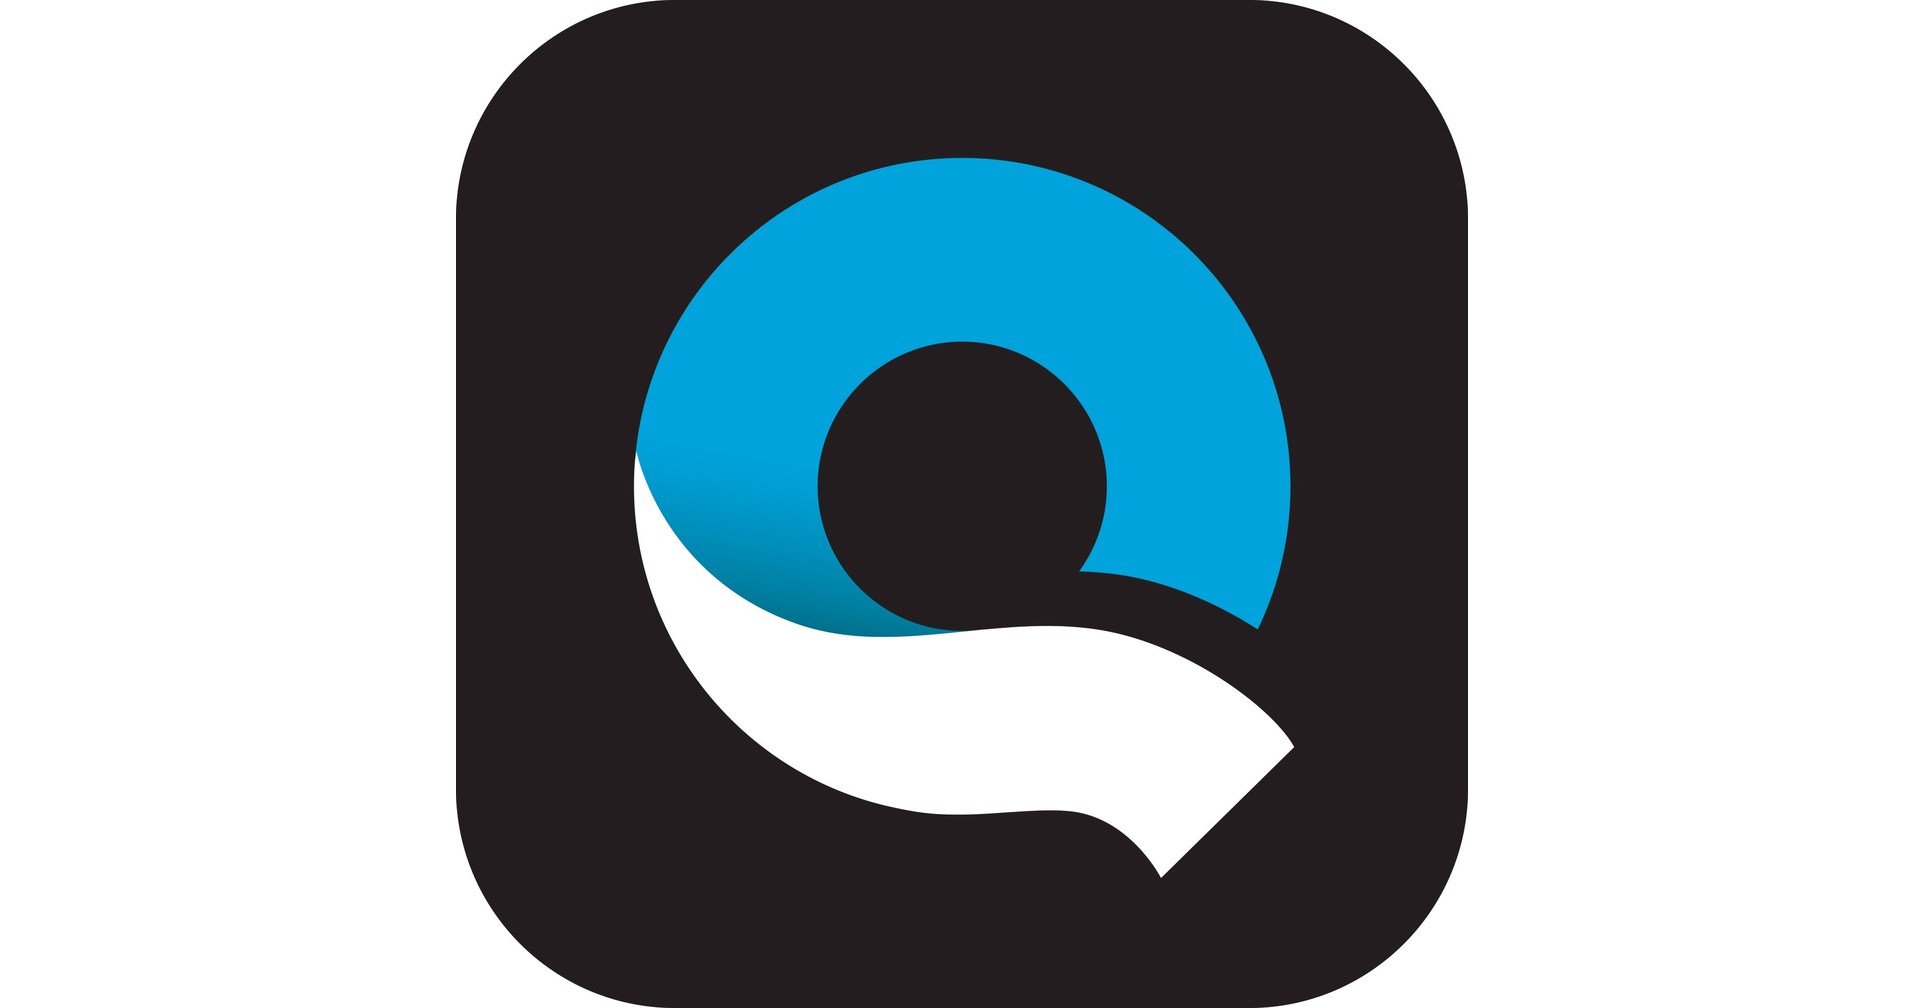 Honor 8 Pro Smartphones to Feature GoPro&#39;s Quik Mobile Video Editing App